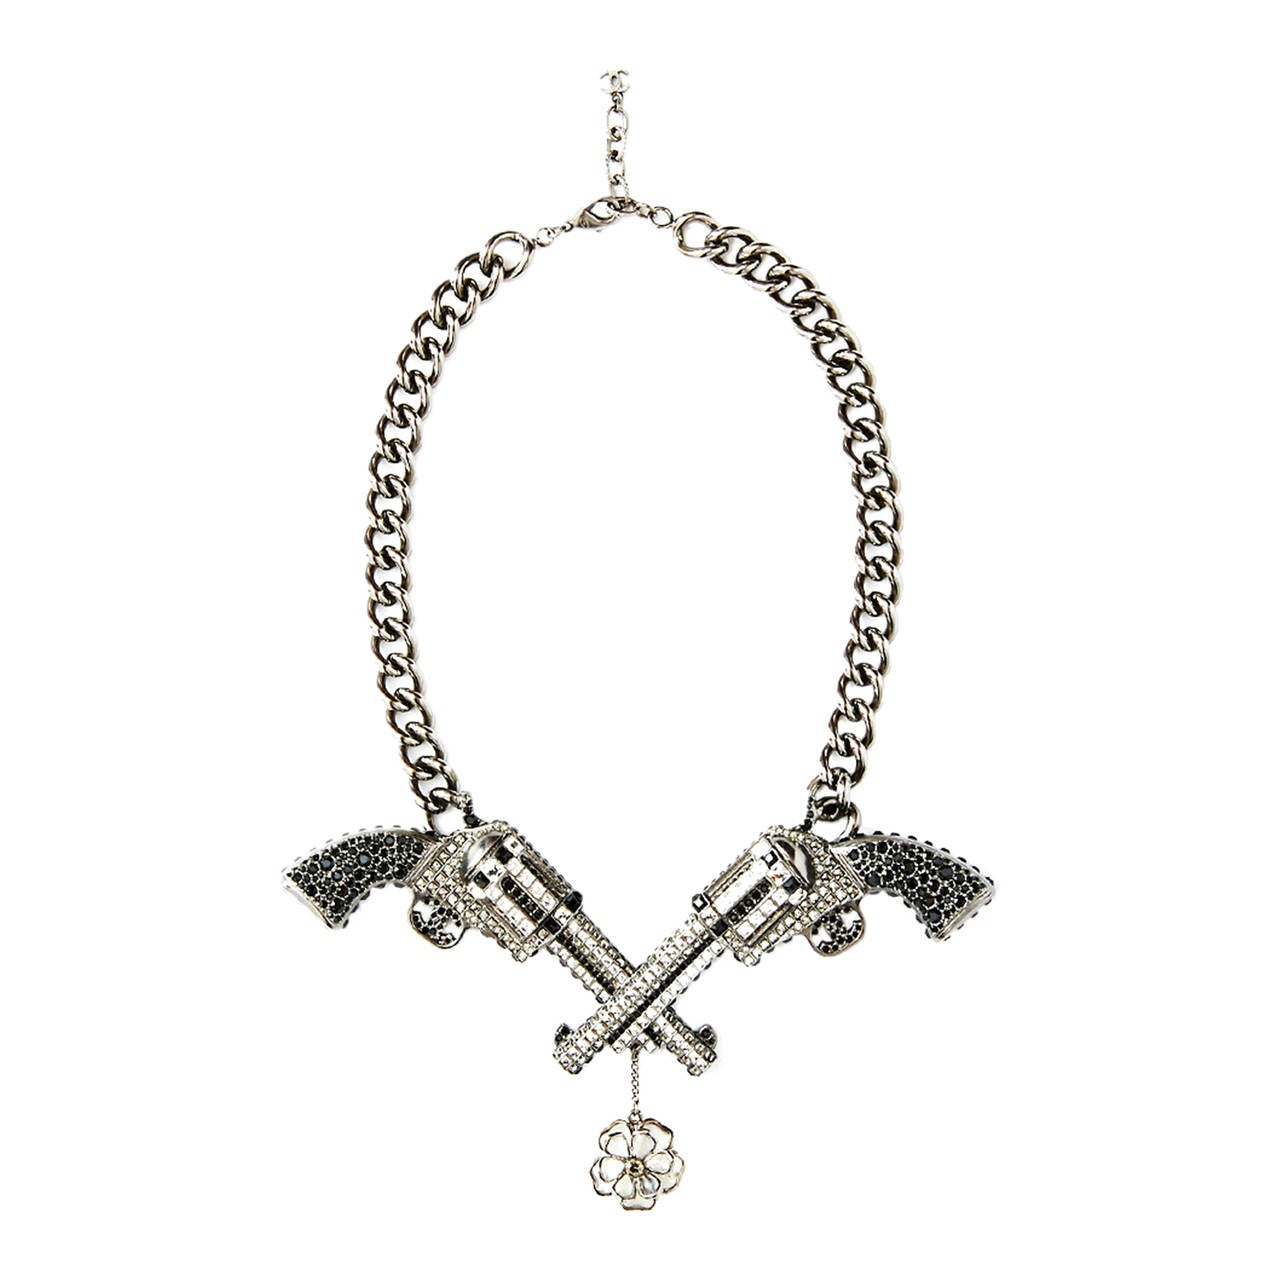 Chanel Gun Necklace Paris - Dallas Collection